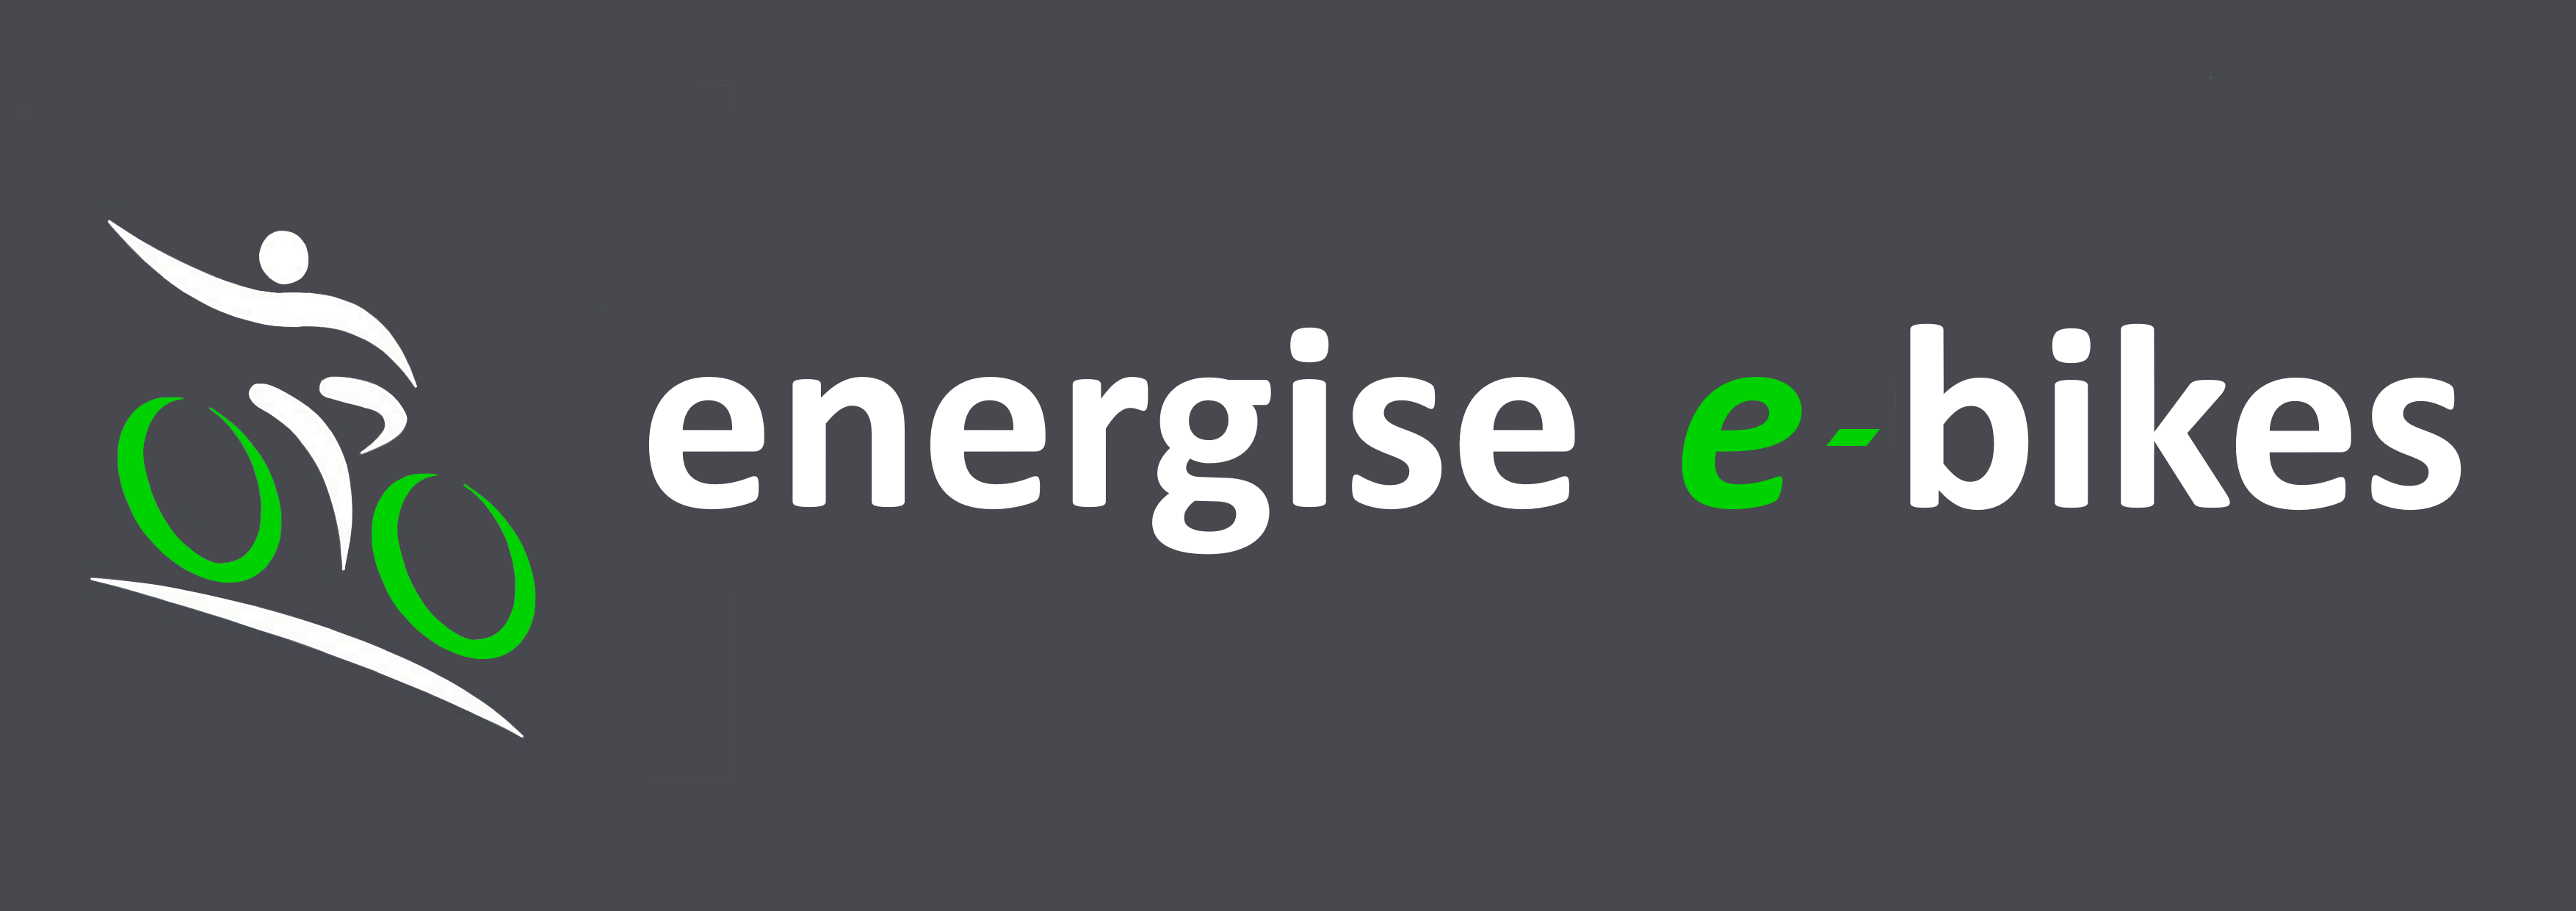 ENERGISE E-BIKES logo